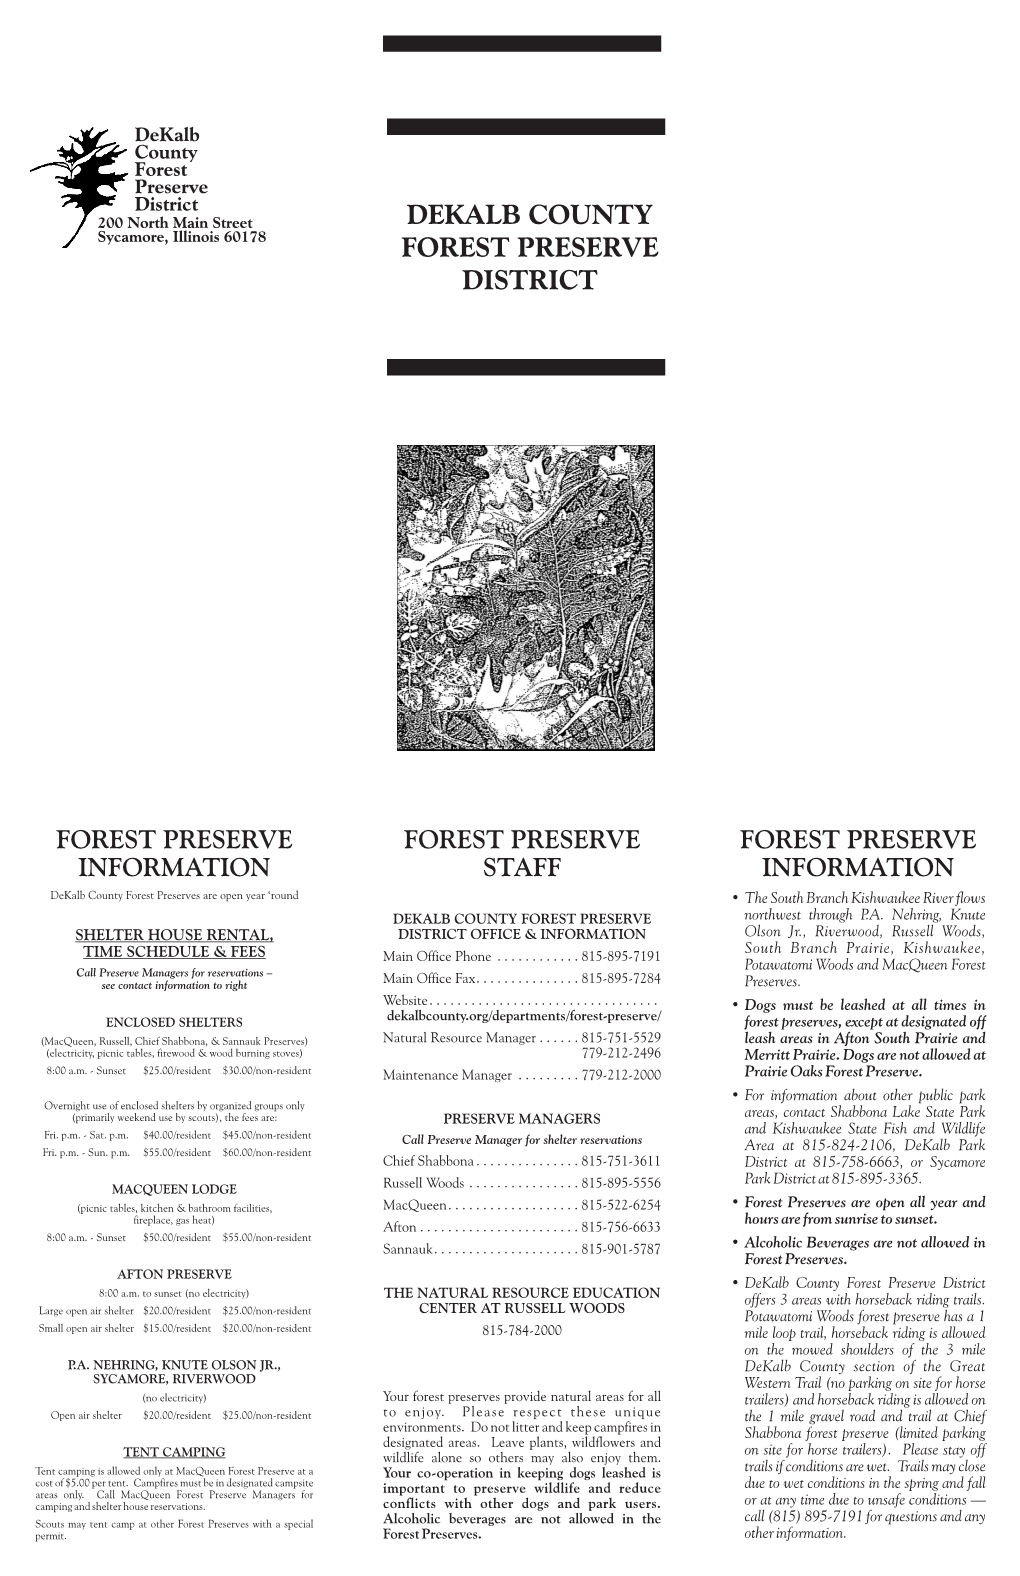 Dekalb County Forest Preserve Brochure